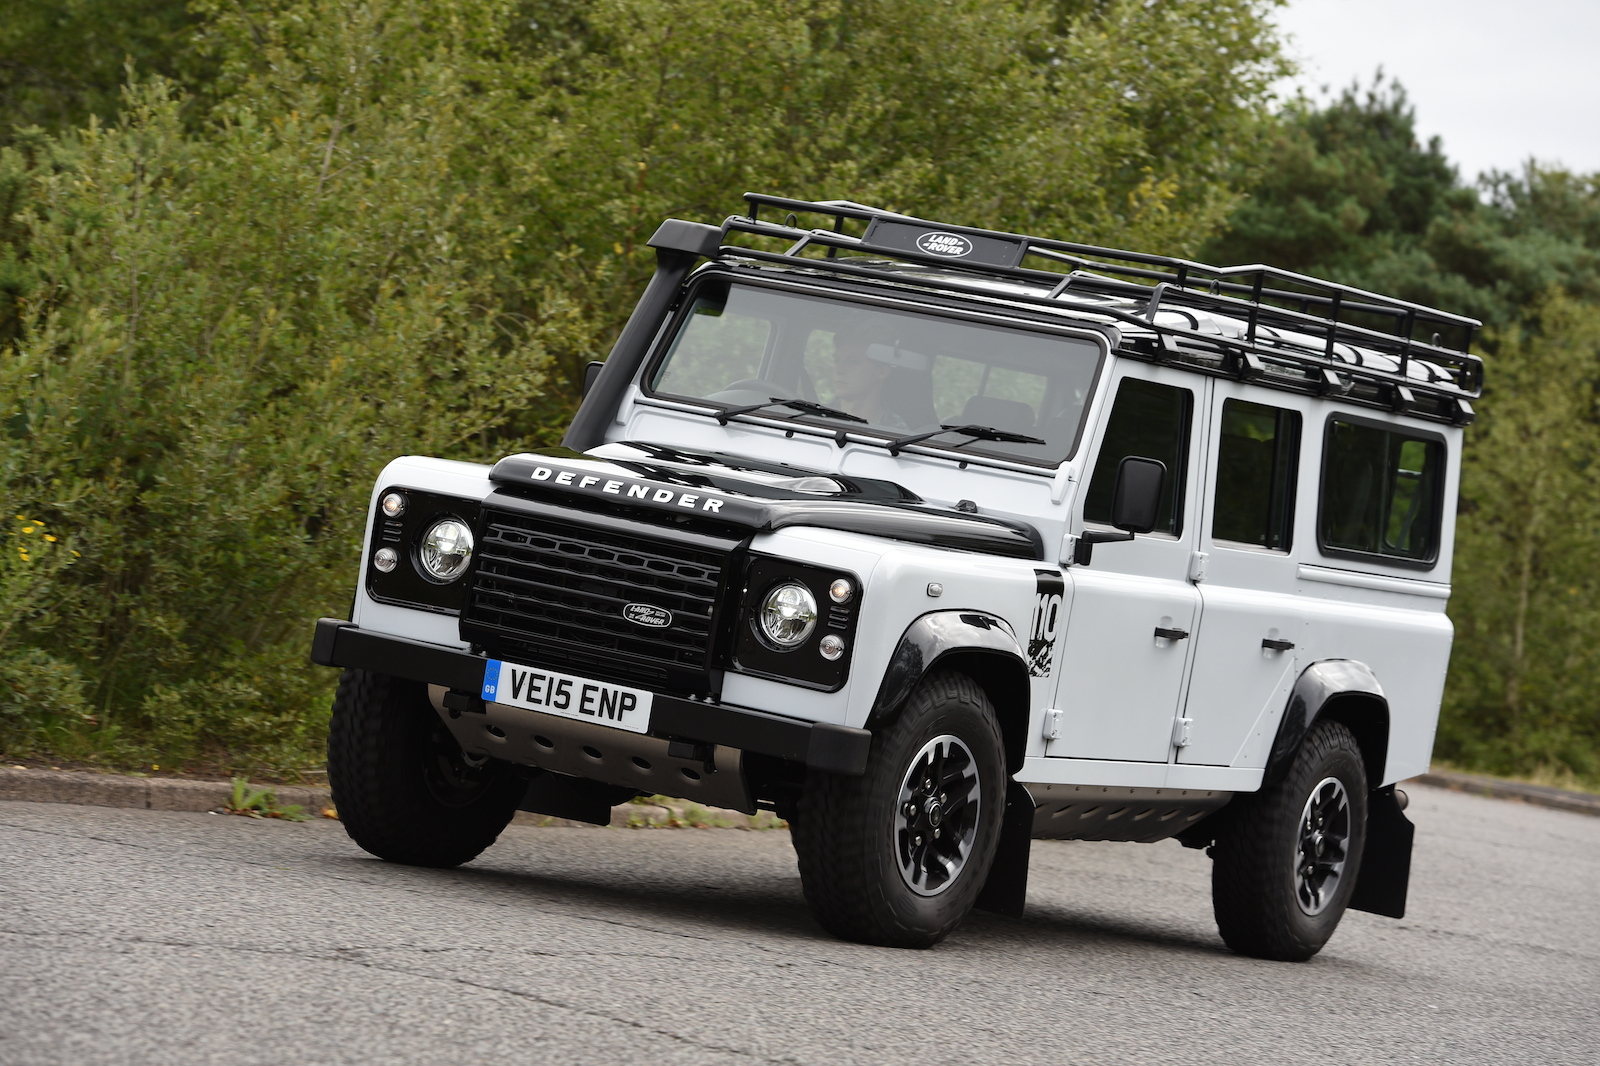 bod Eigenwijs Coöperatie 2015 Land Rover Defender 110 Adventure UK first drive | Autocar